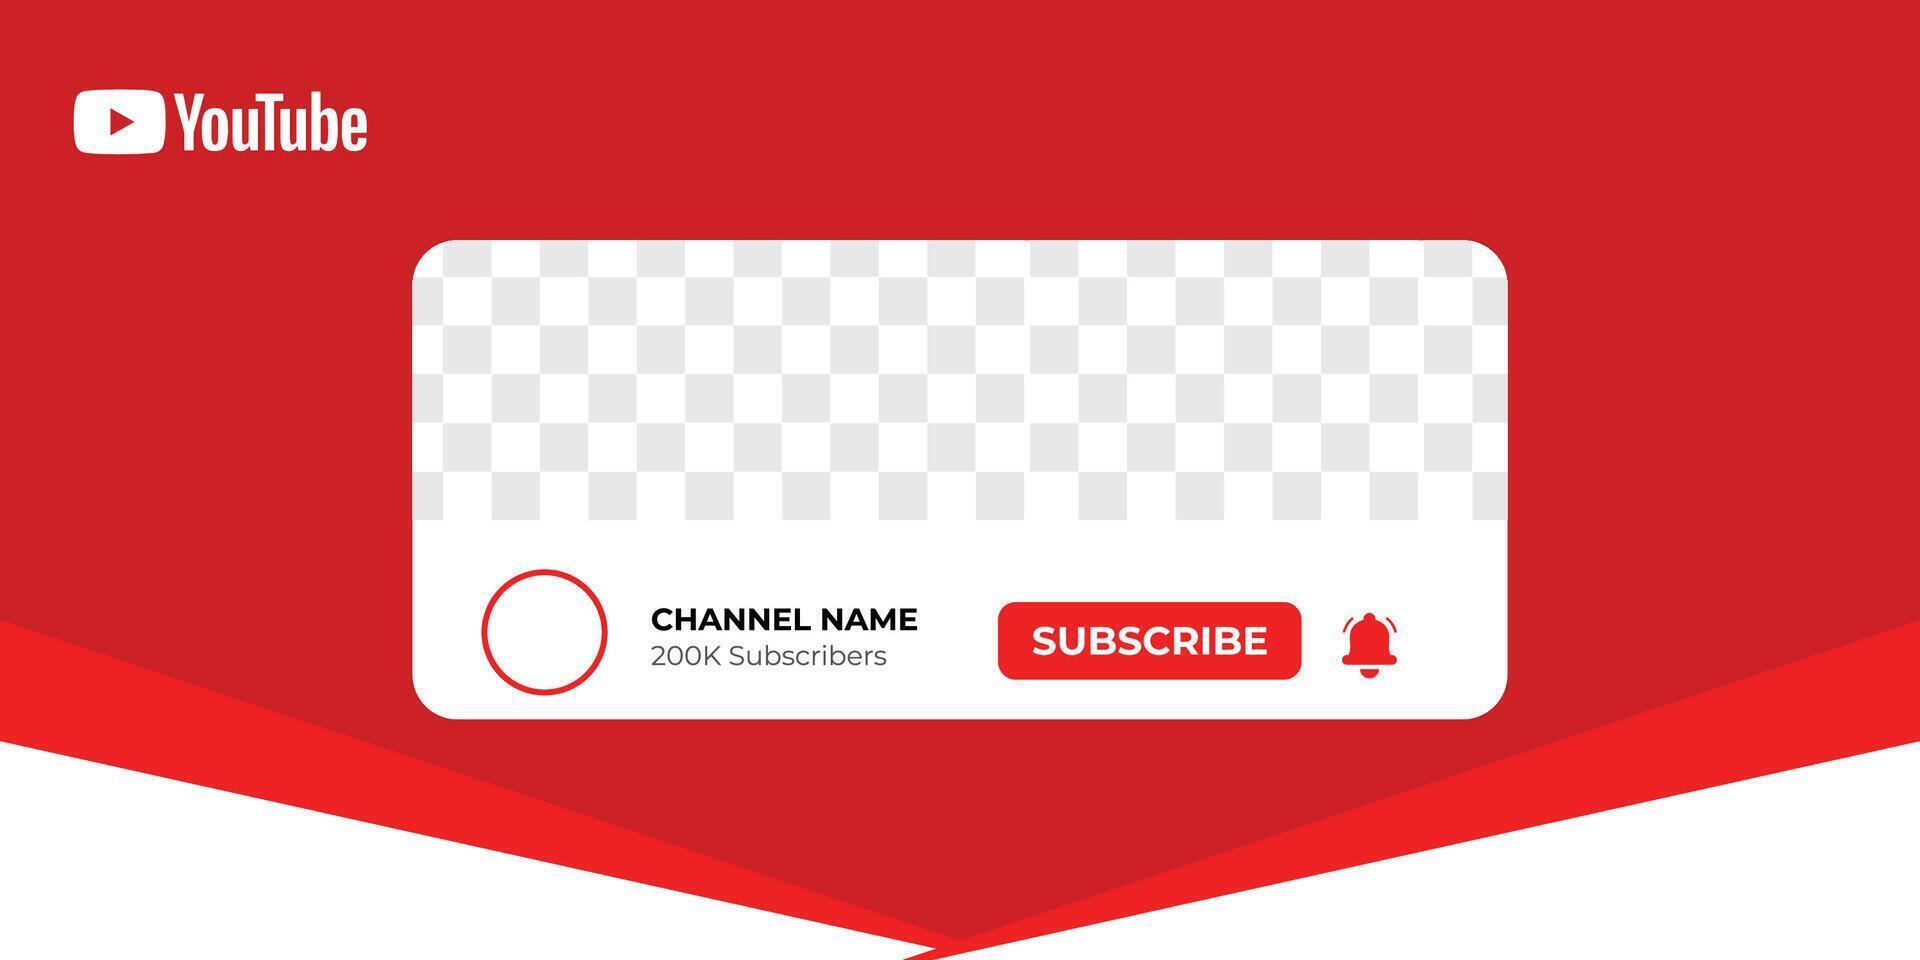 Youtube perfil ícone interface. se inscrever botão. canal nome. vetor